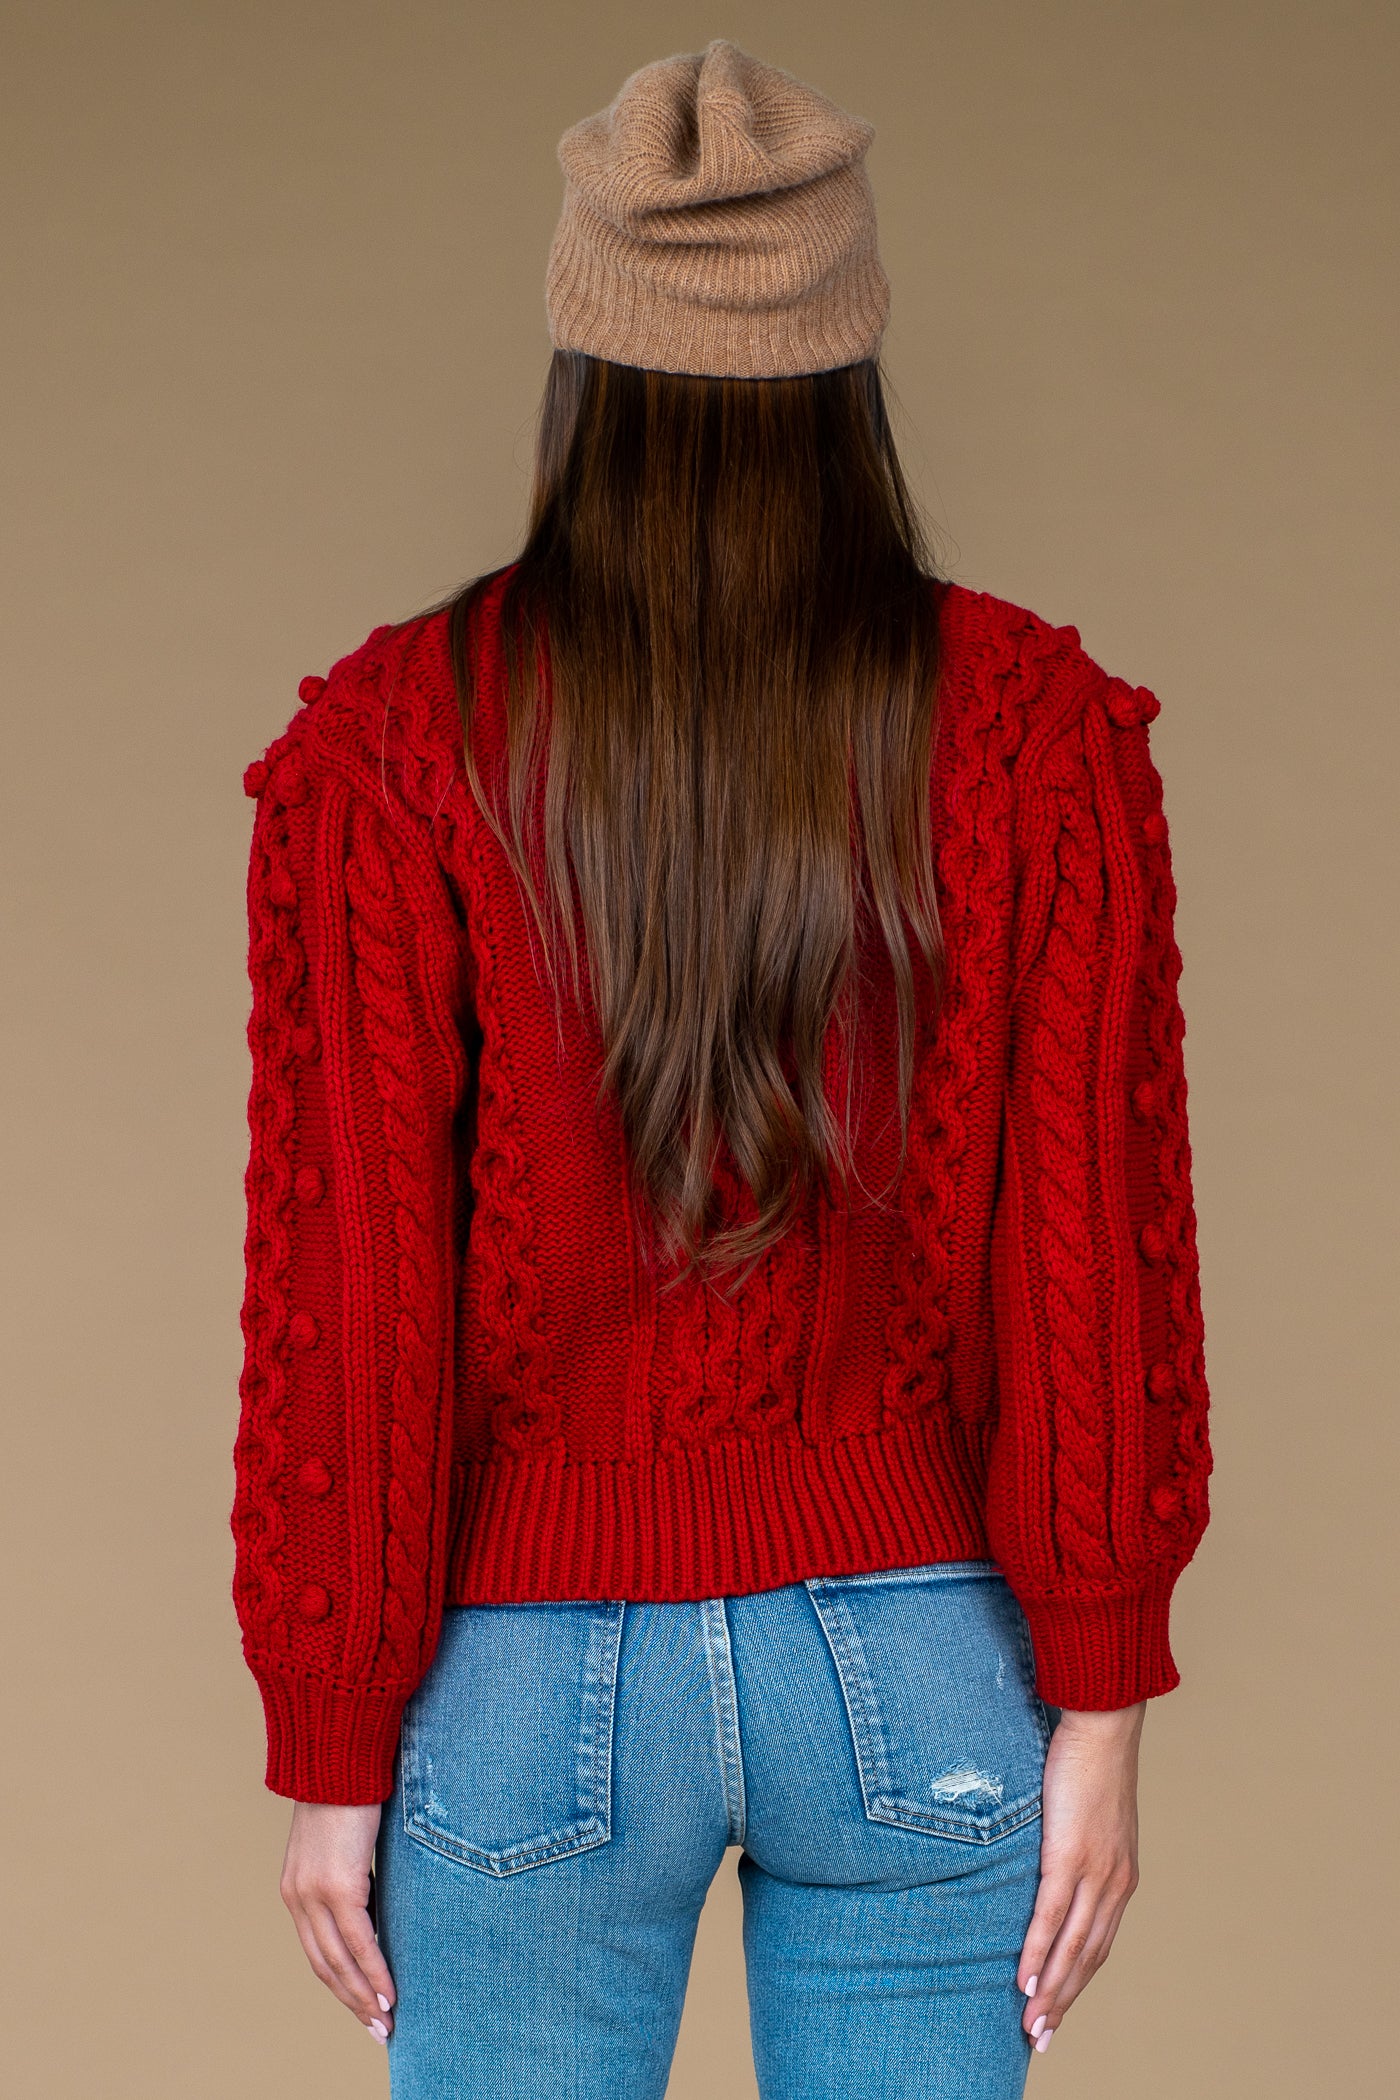 Poppy Bobble Knit Sweater in Red